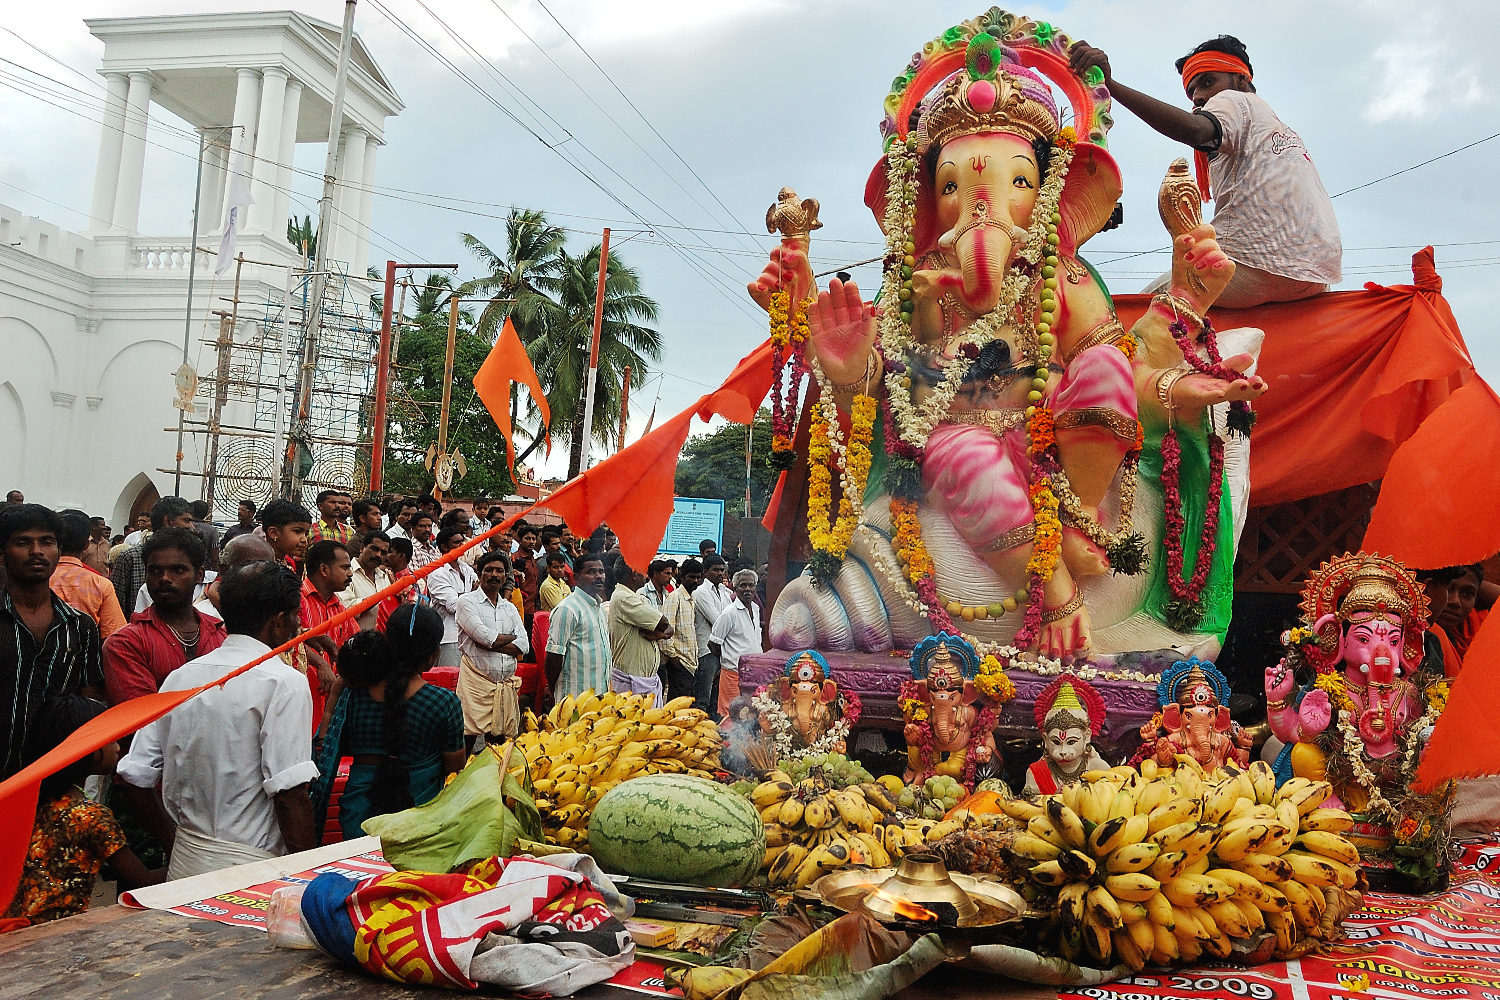 Vividly-coloured statues at Ganesh Chaturthi festival in Trivandrum, Kerala. © Thejas Panarkandy / CC BY 2.0